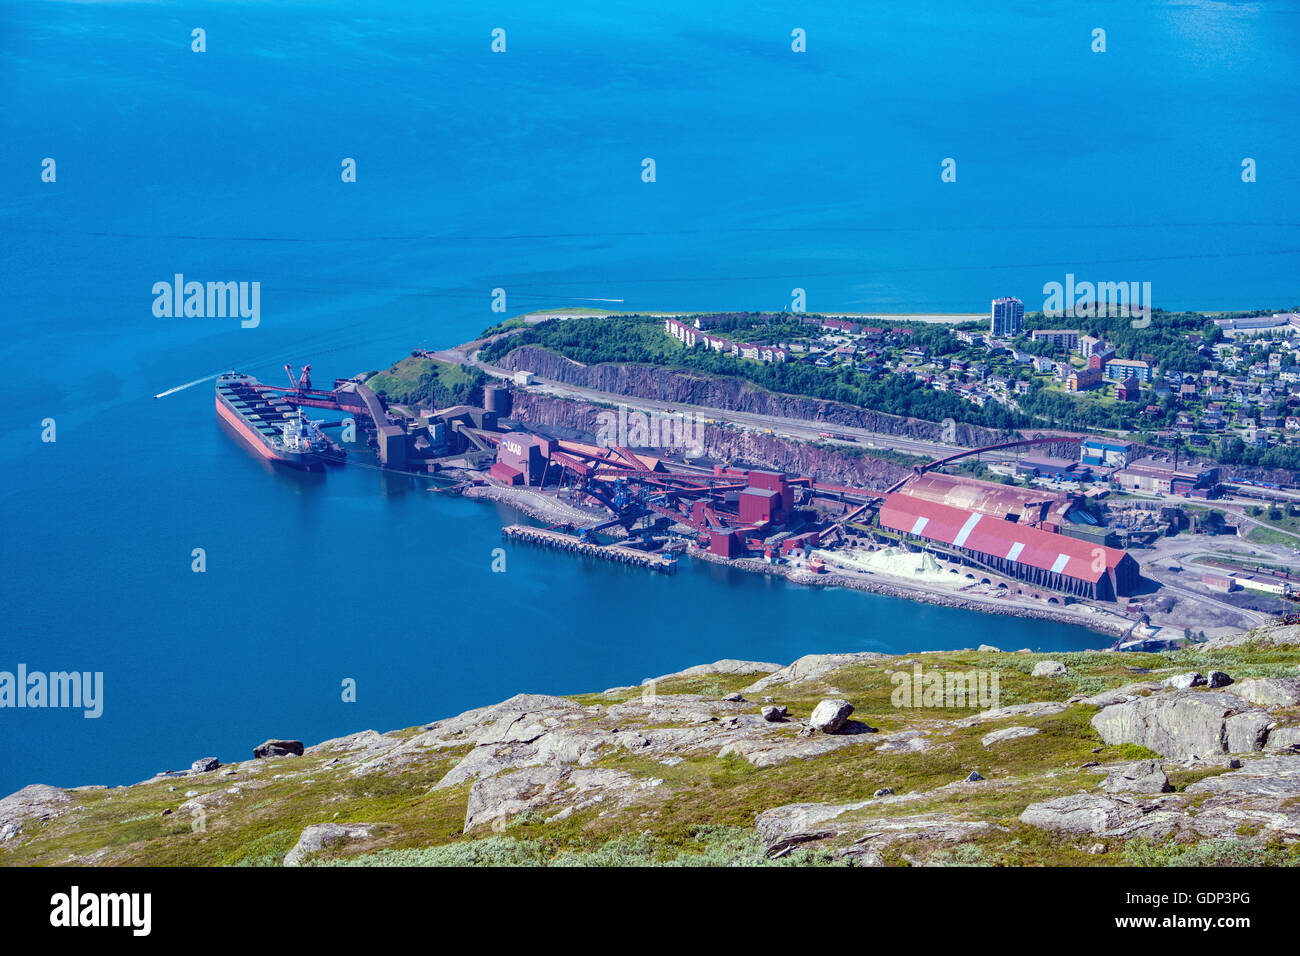 Alexandra P bulk carrier di minerale, ormeggiata presso LKAB jetty, Narvik, Arctic Norvegia Foto Stock